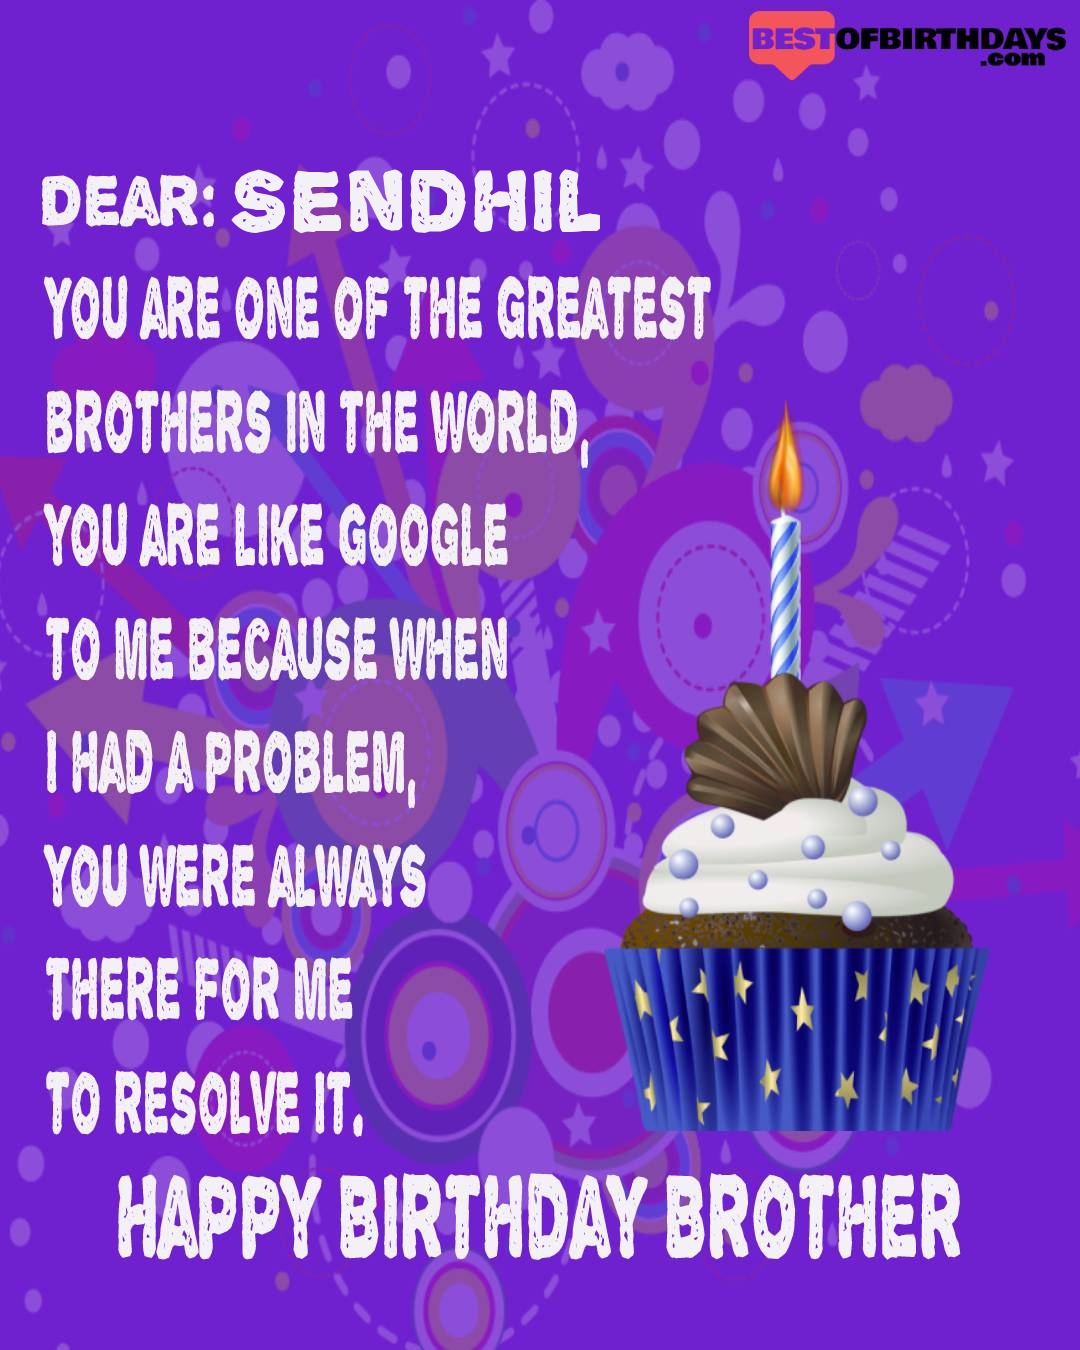 Happy birthday sendhil bhai brother bro